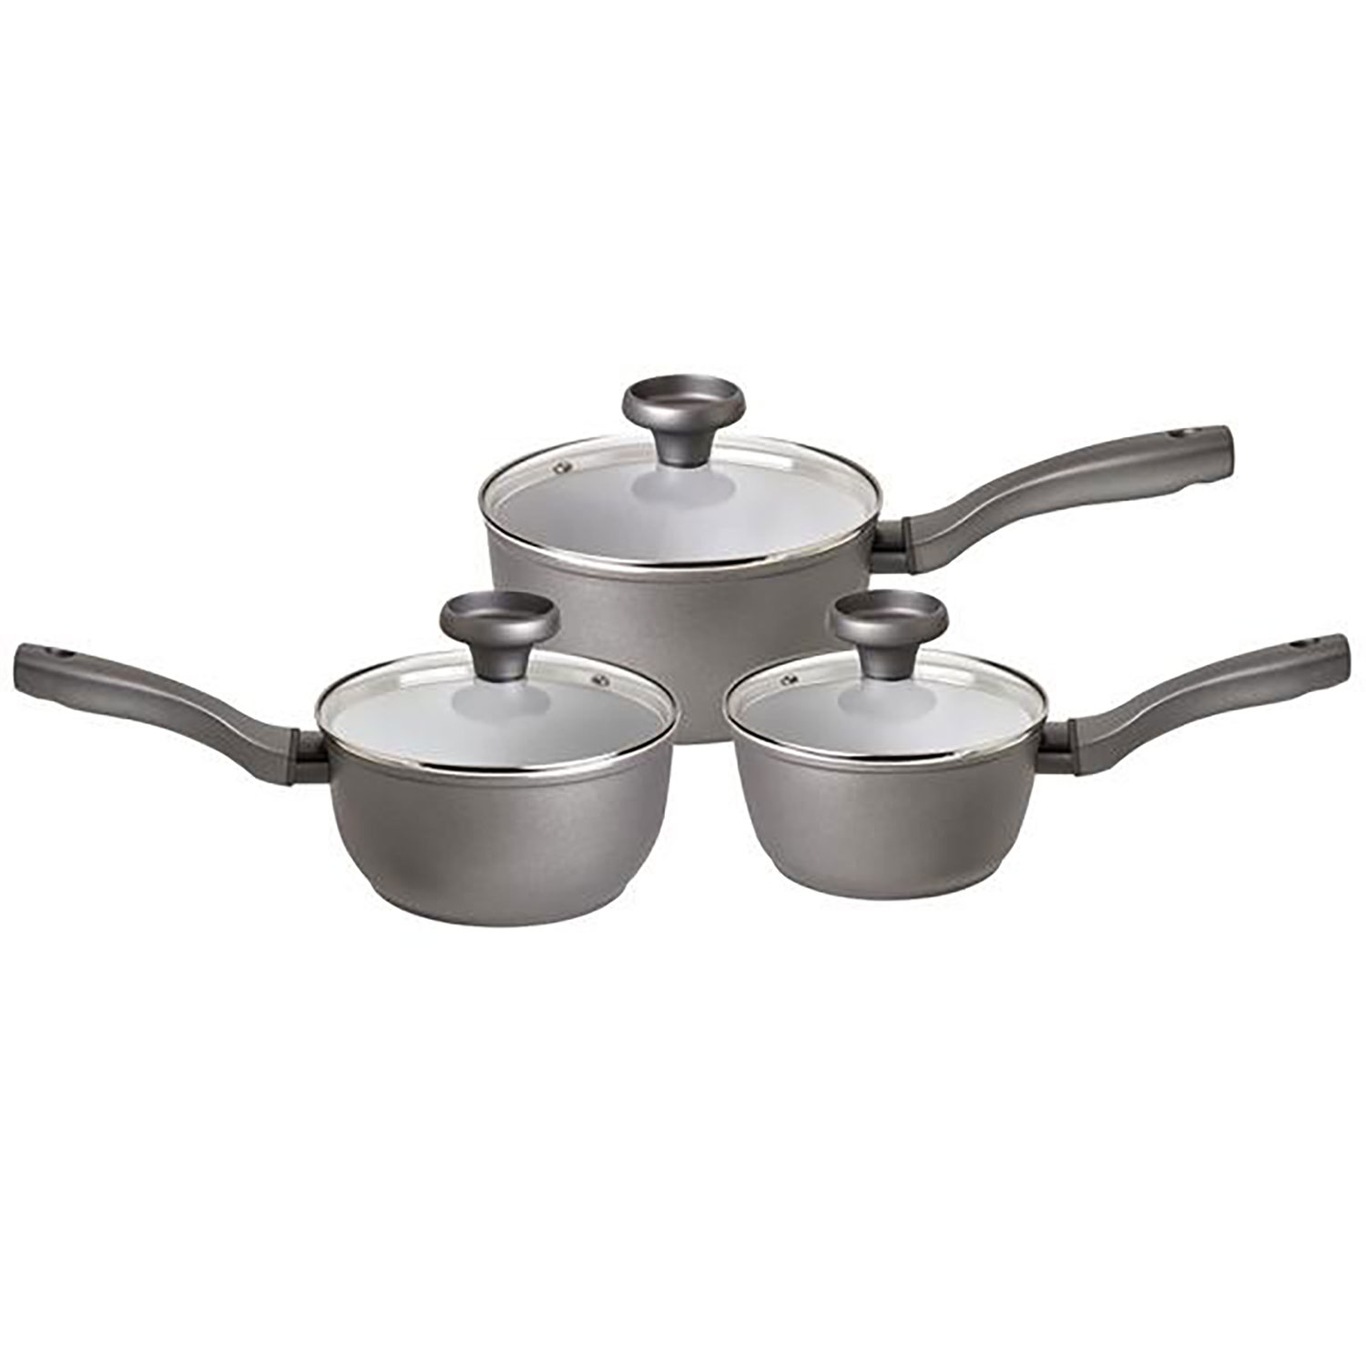 https://royaldesign.com/image/2/meyer-earthpan-3-set-saucepan-with-lid-0?w=800&quality=80